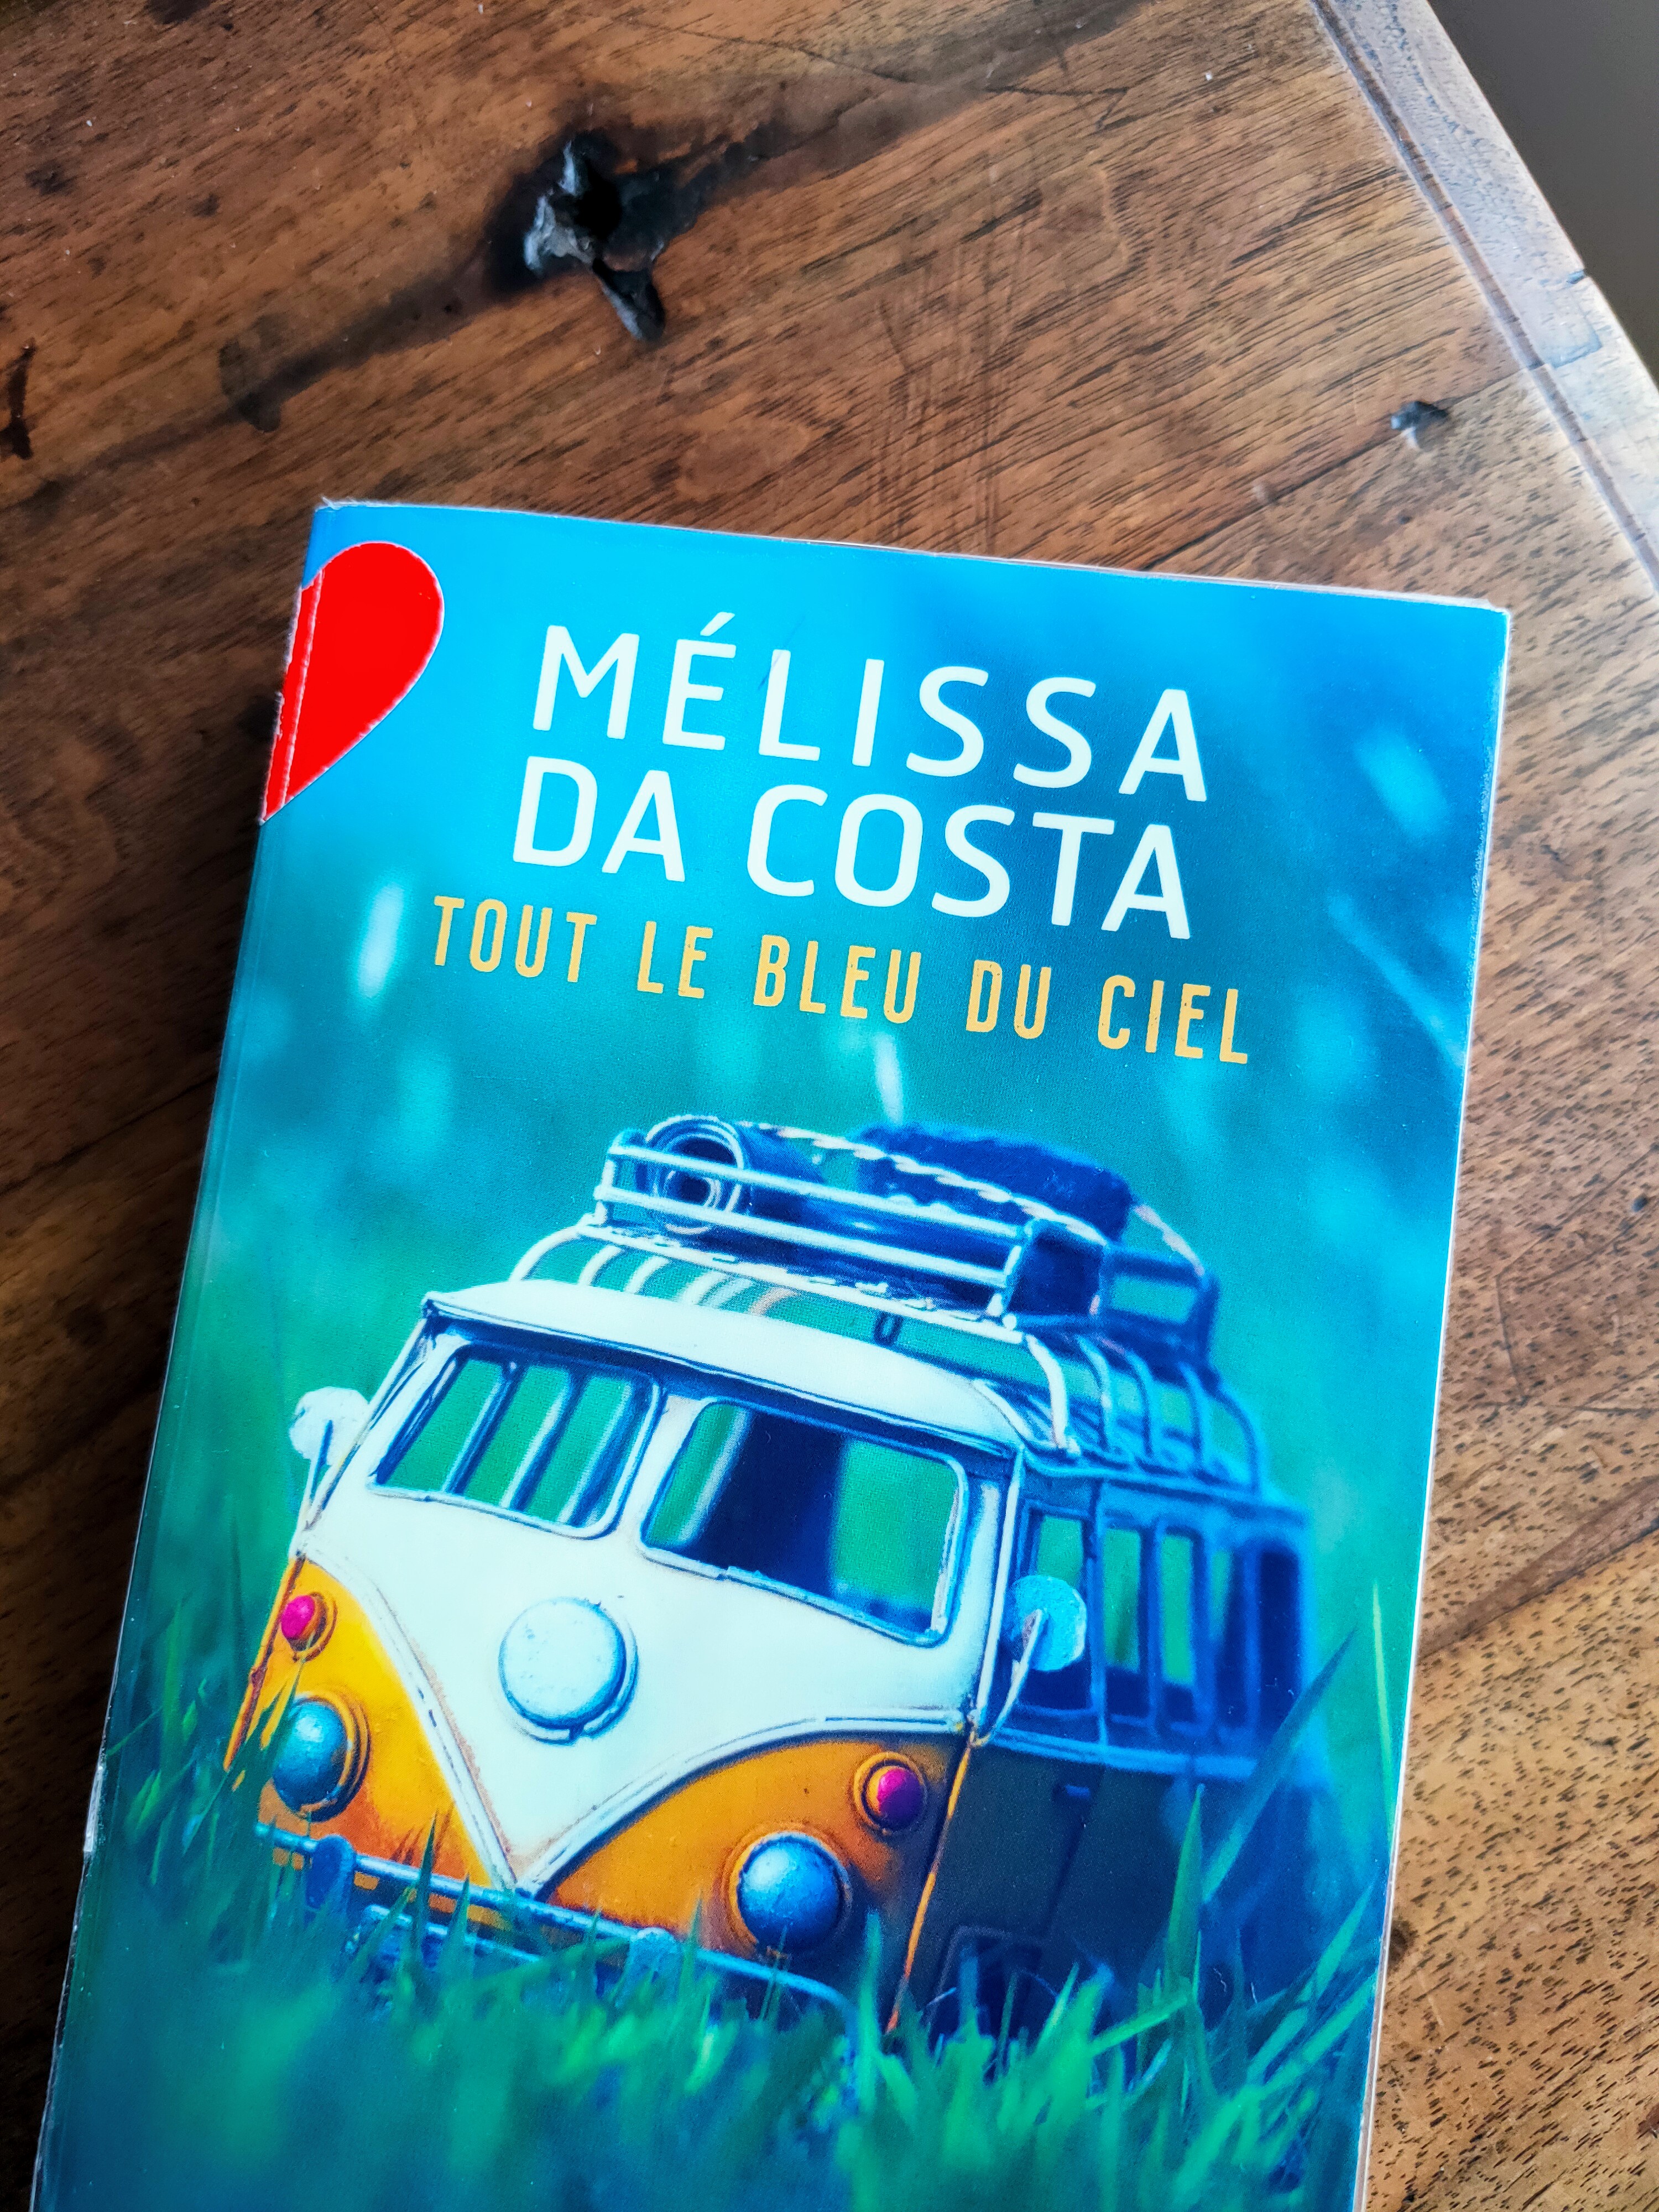 Tout le bleu du ciel - Mélissa da Costa - L'Apostrophée